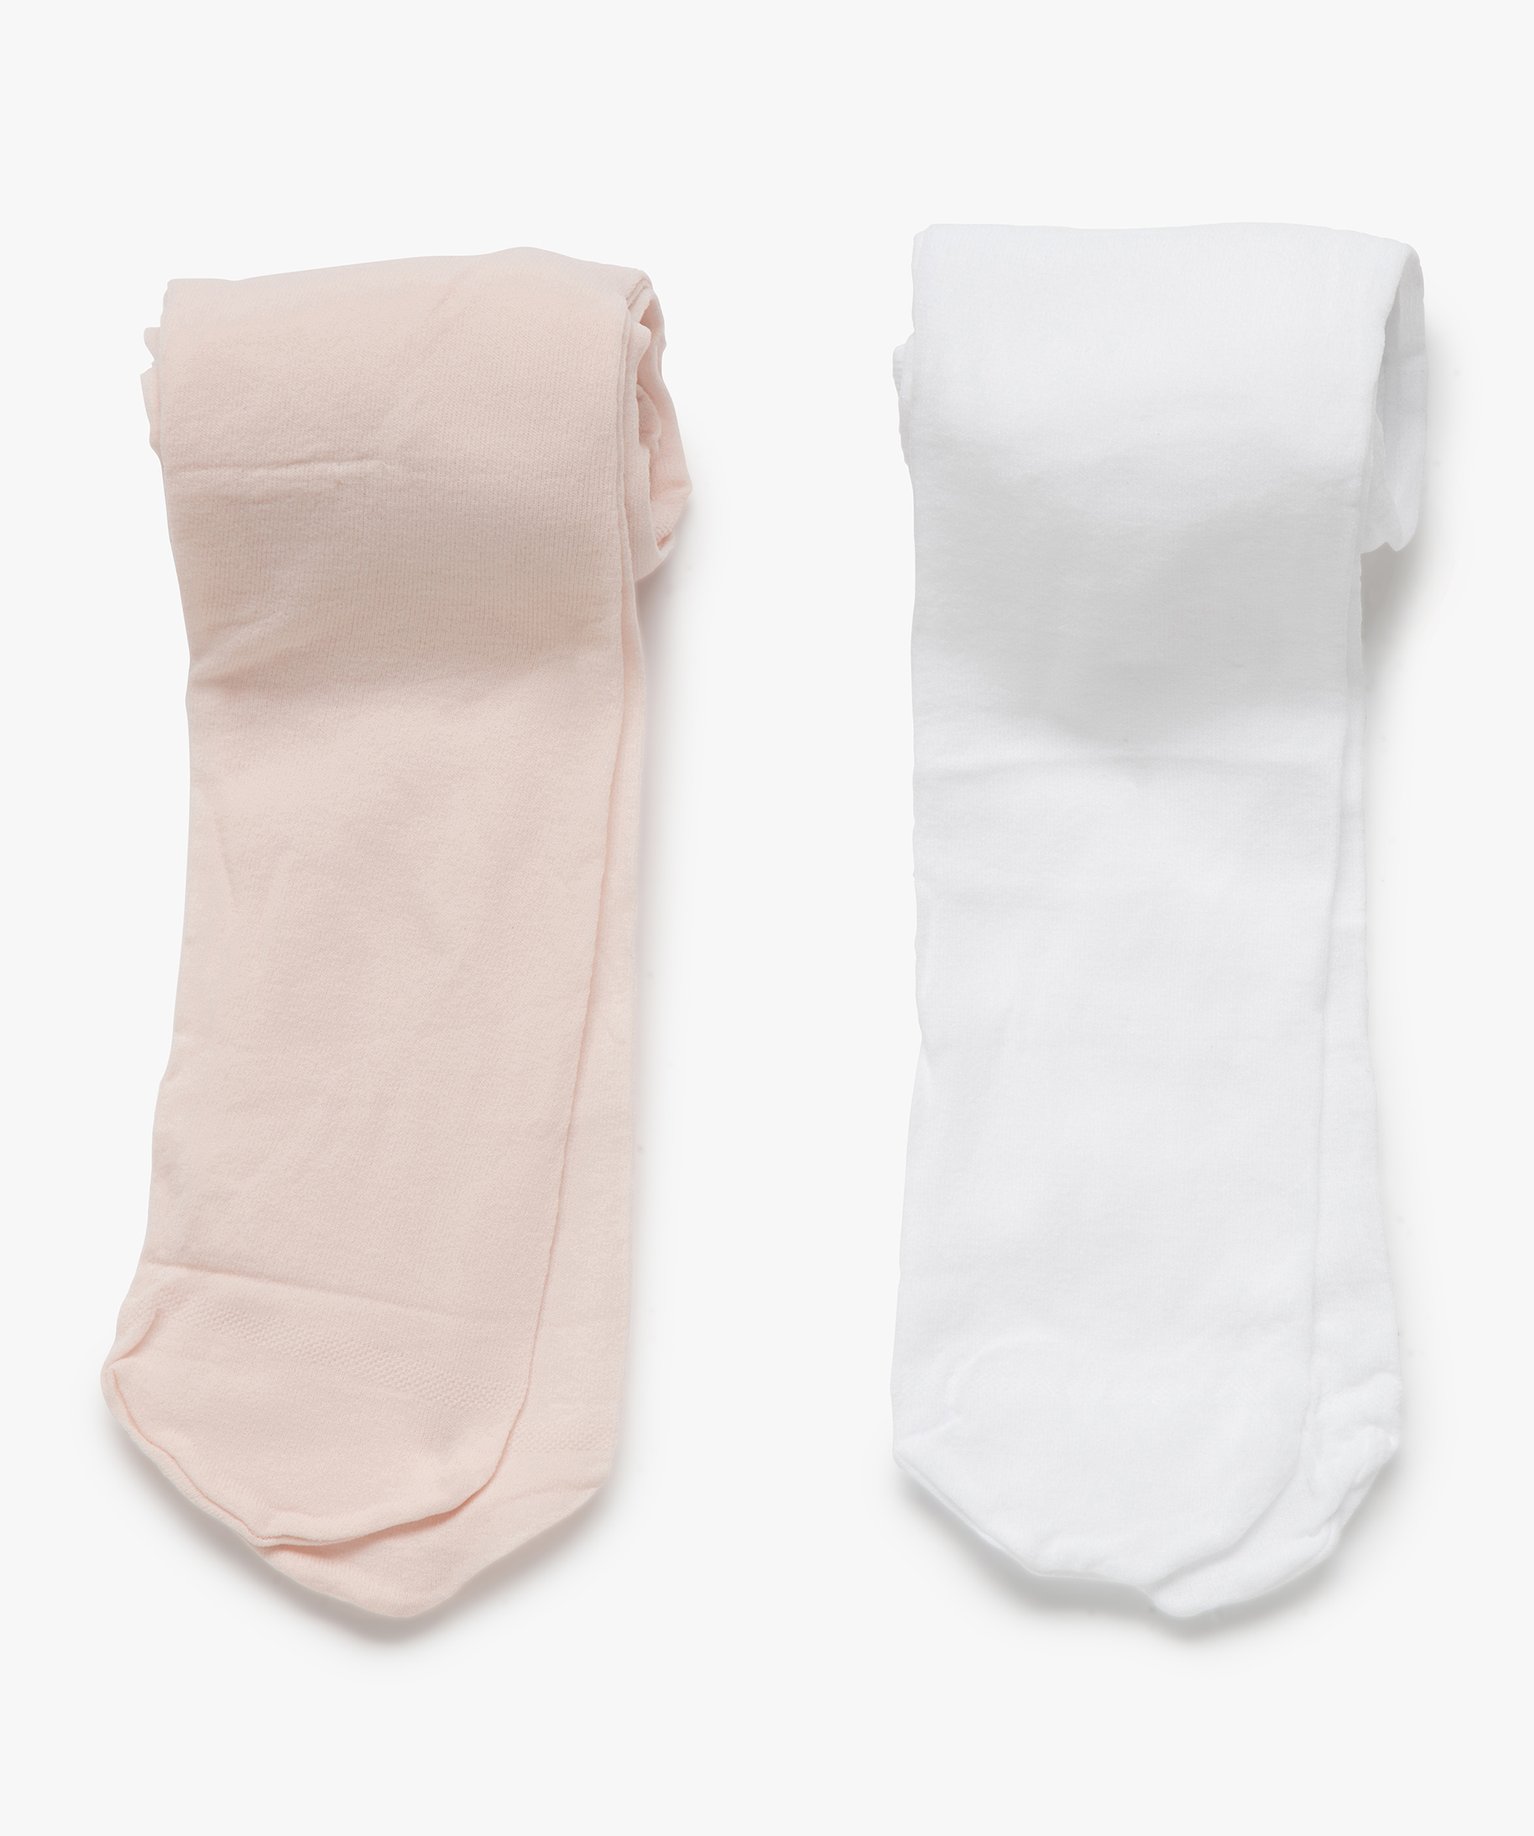 Collants bébé fille semi-opaque (lot de 2) - 18/20 - rose vif - GEMO